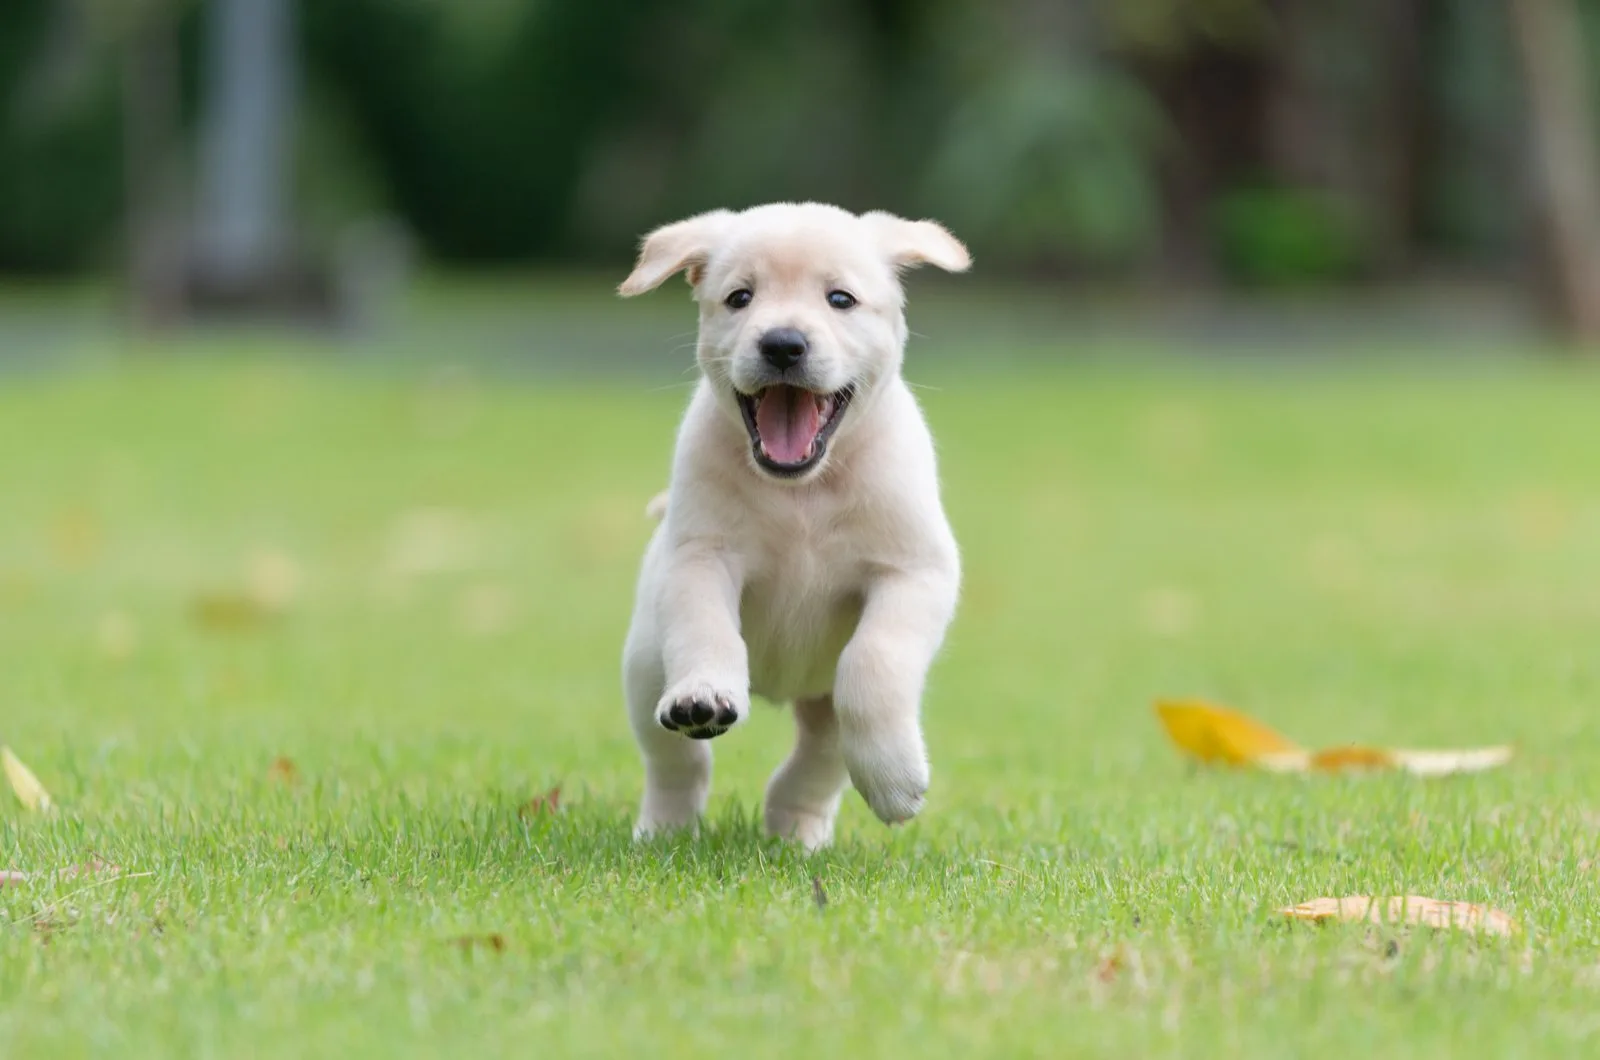 The Labrador Retriever runs across the field